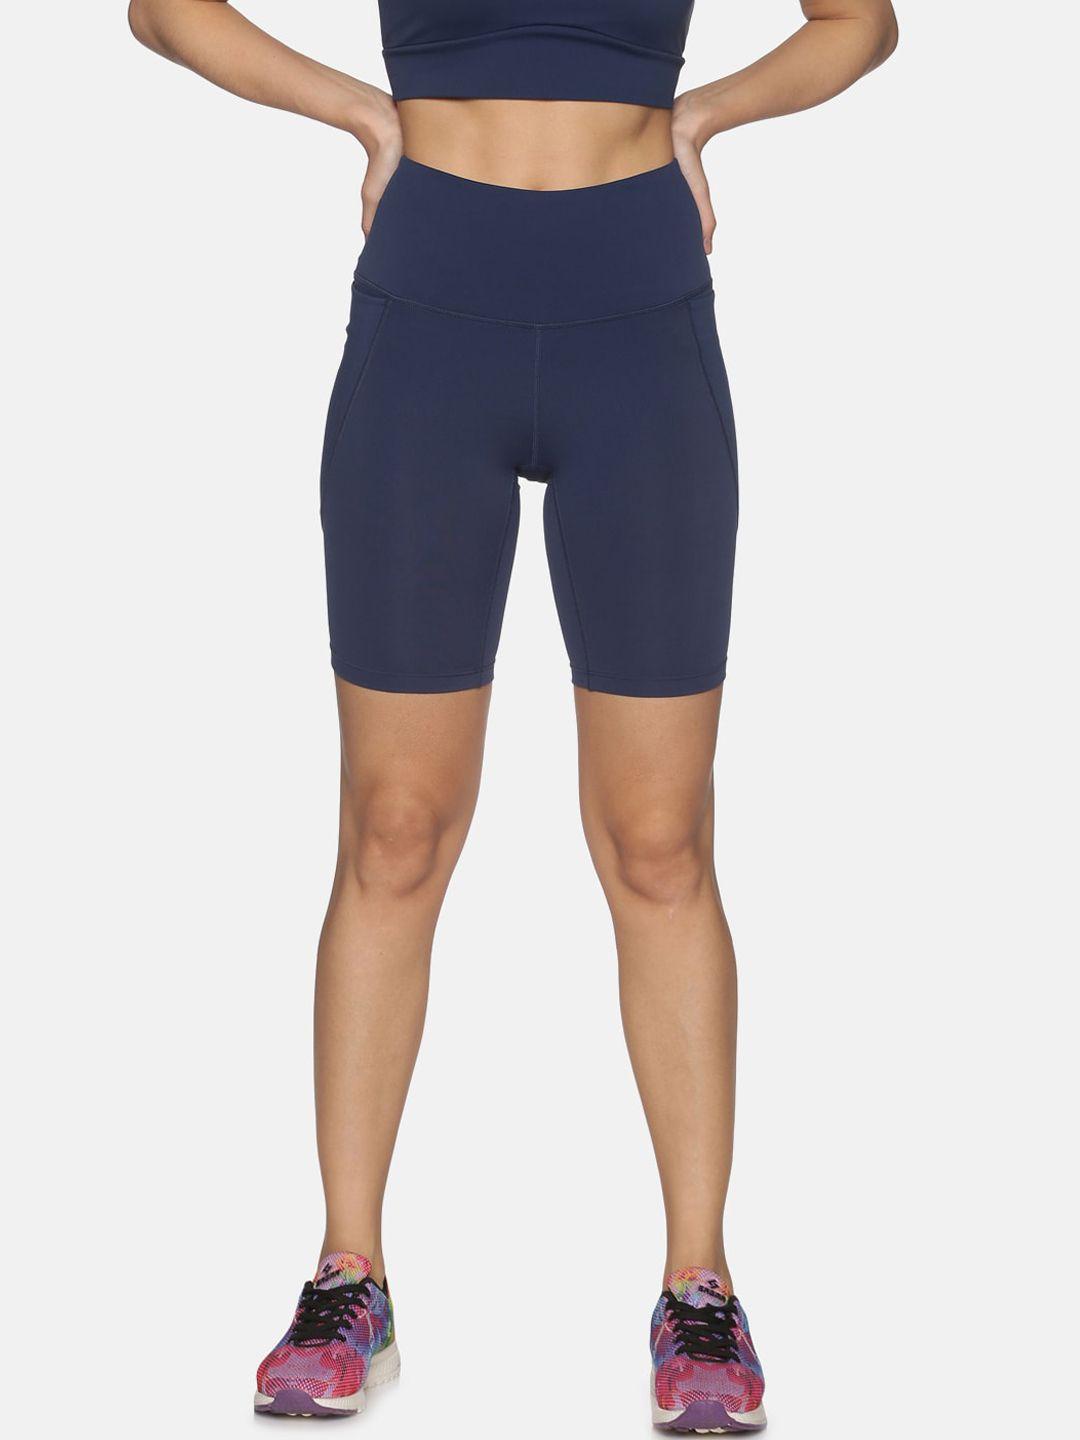 blissclub women navy blue high waist the ultimate cycling shorts